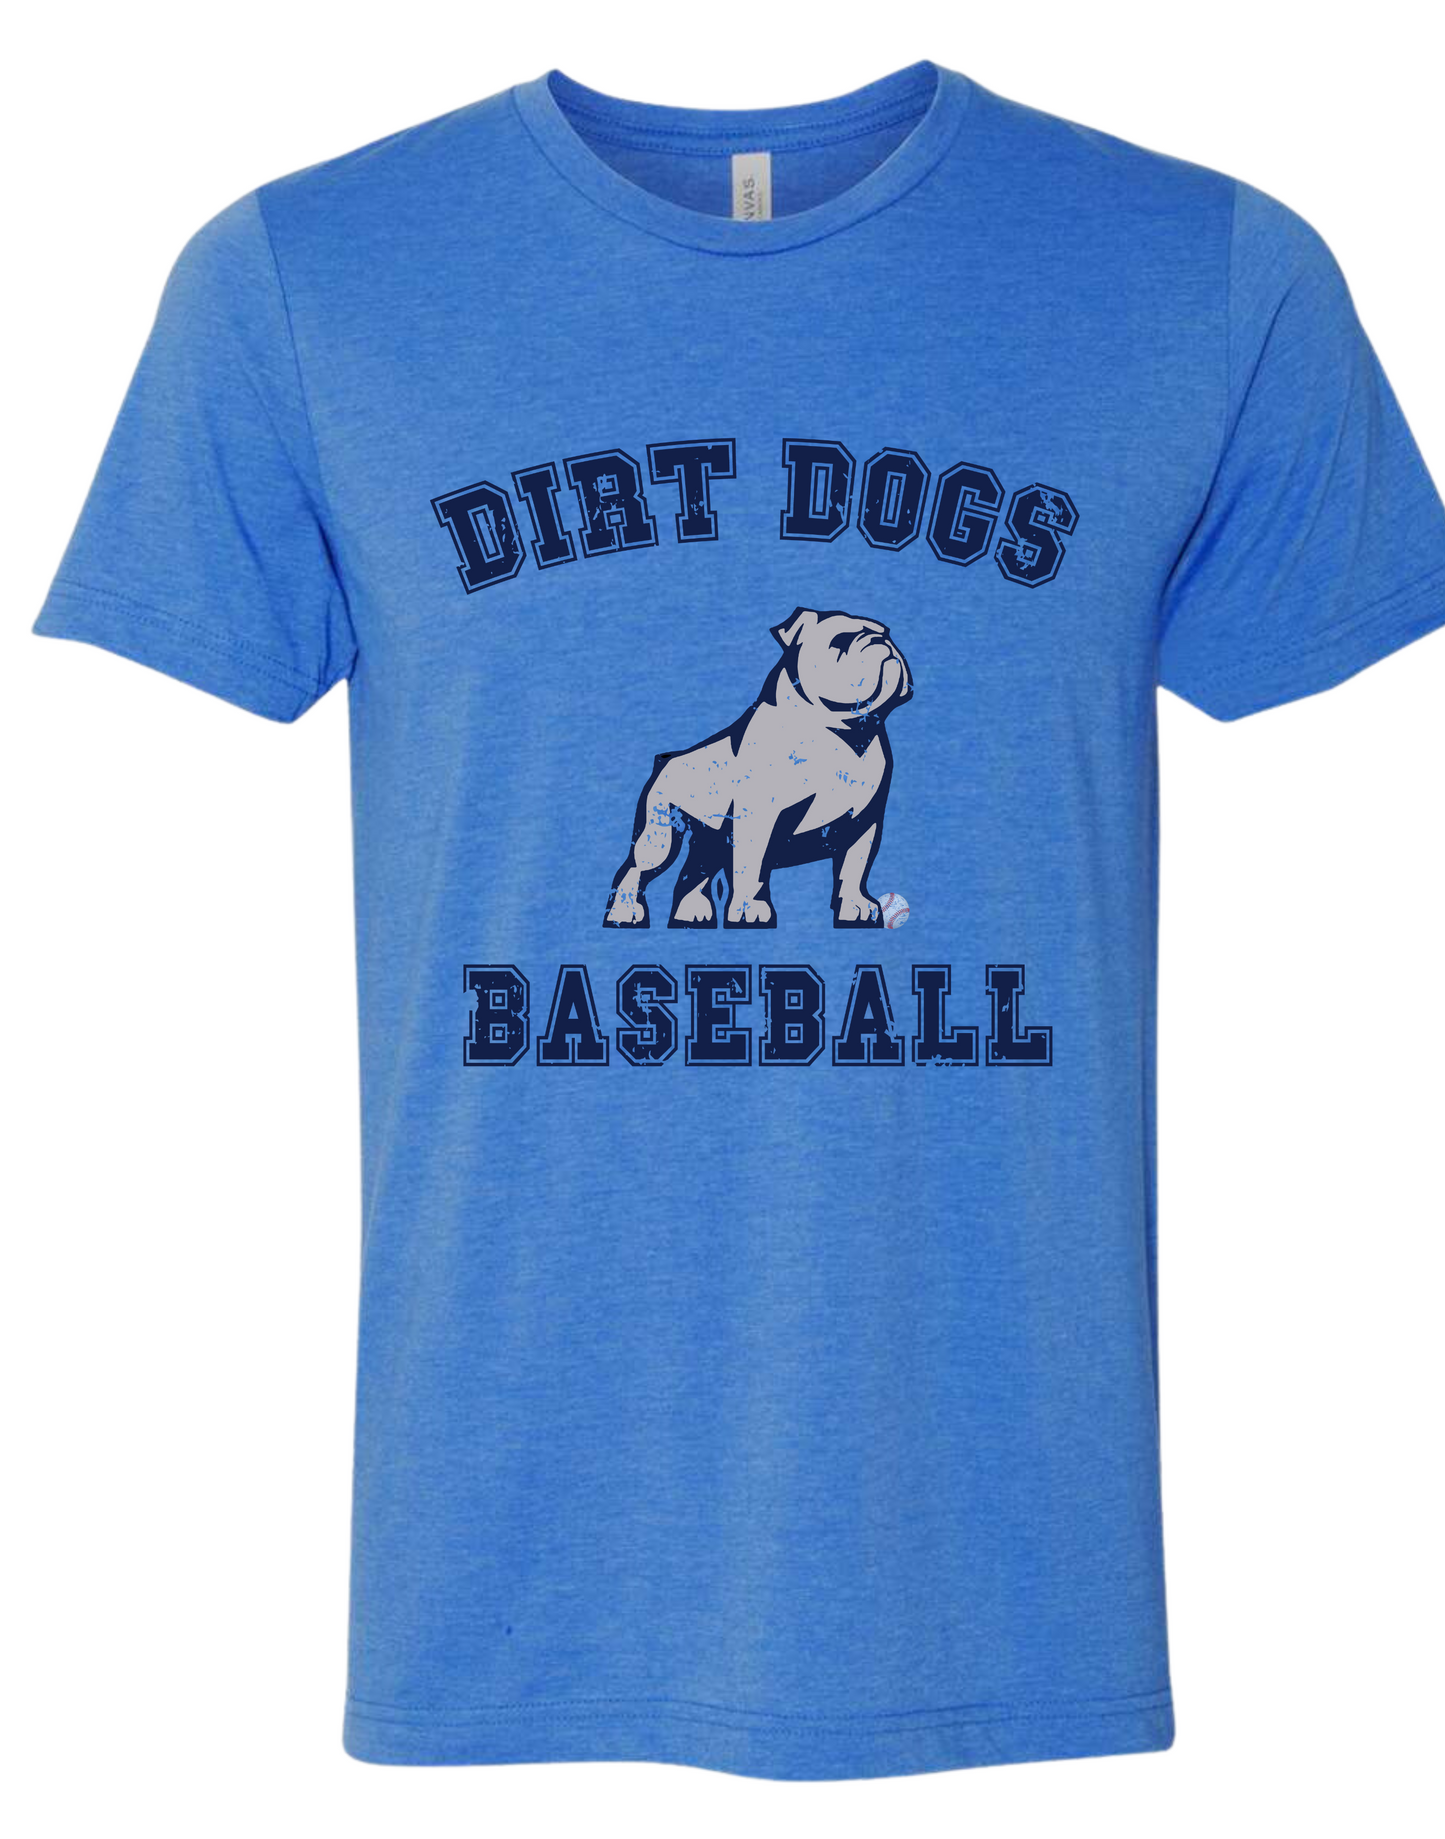 Dirt Dogs Baseball Tee